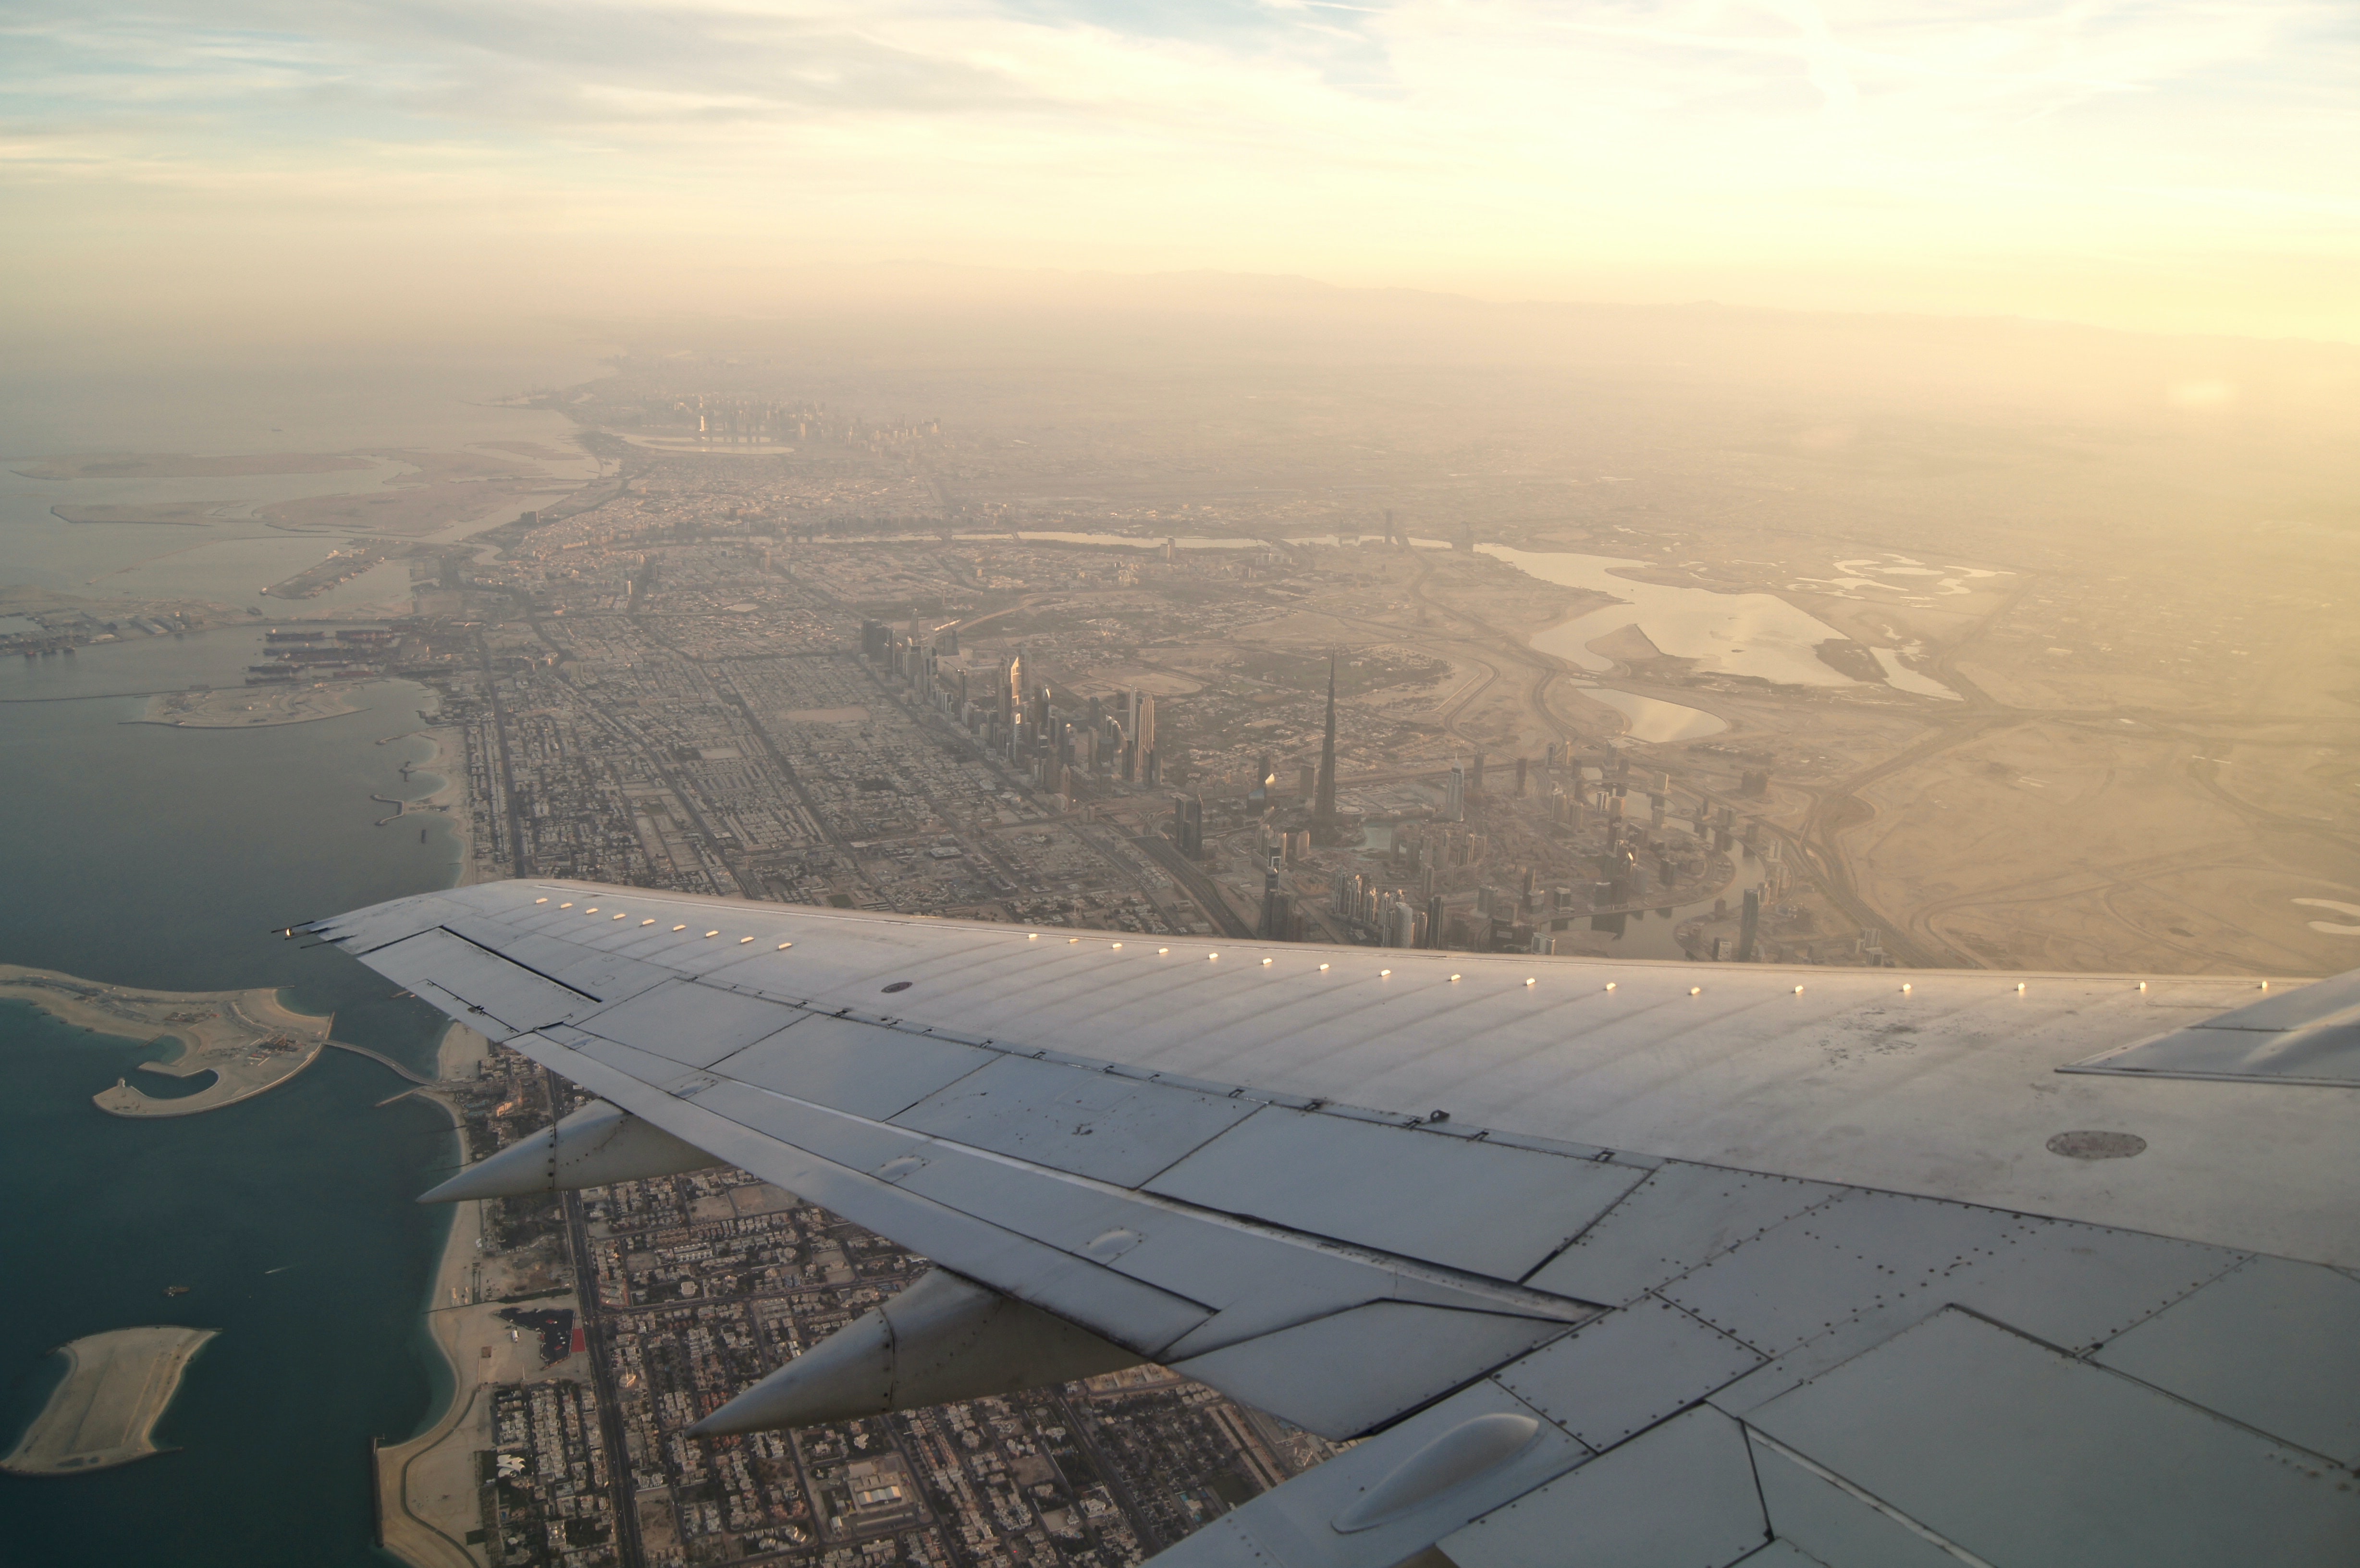 Day 05: Flight from Cairo to Dubai